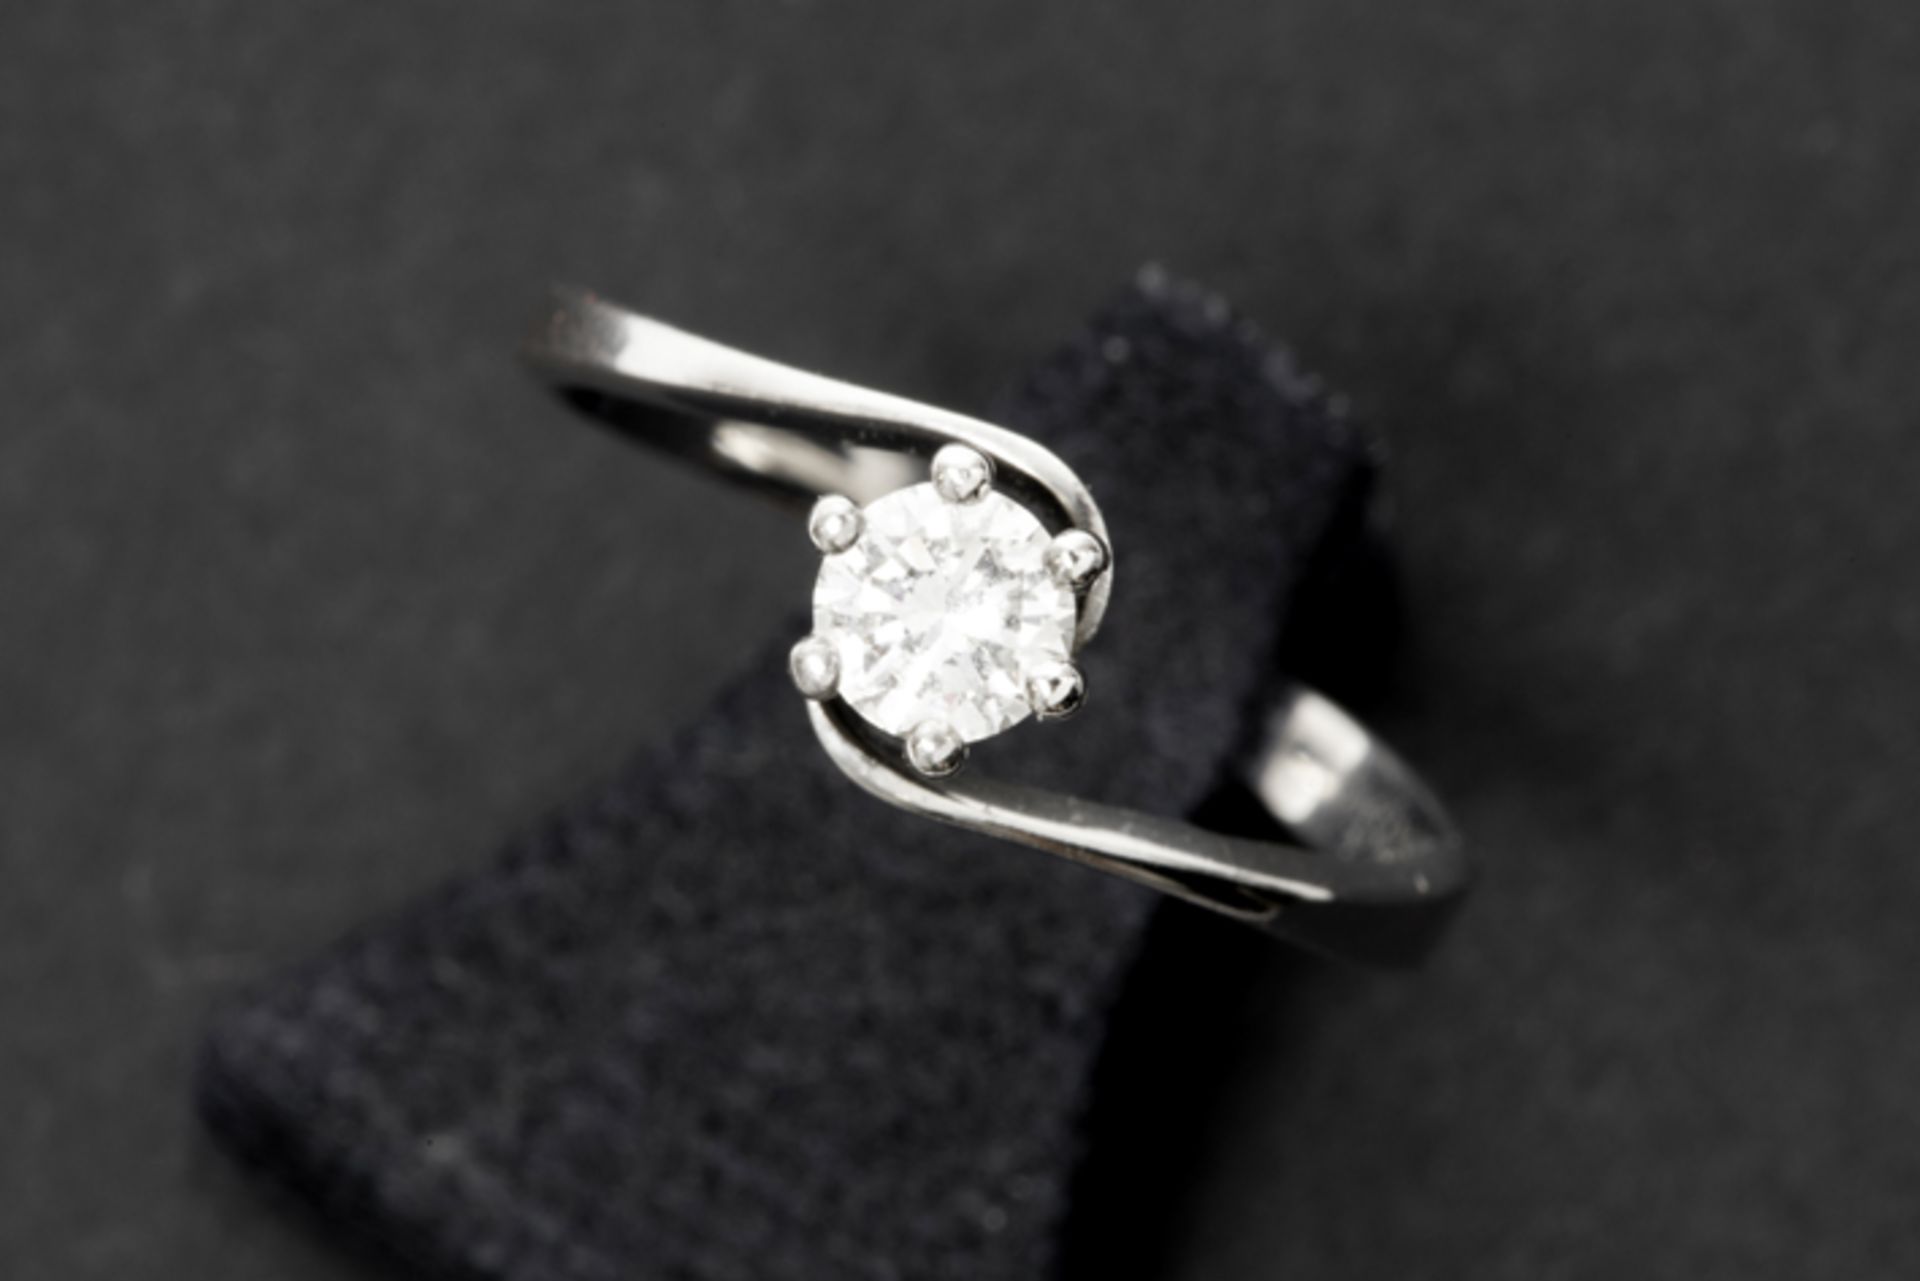 a ca 0,30 carat brilliant cut diamond set in a ring in white gold (18 carat) Solitaire briljant